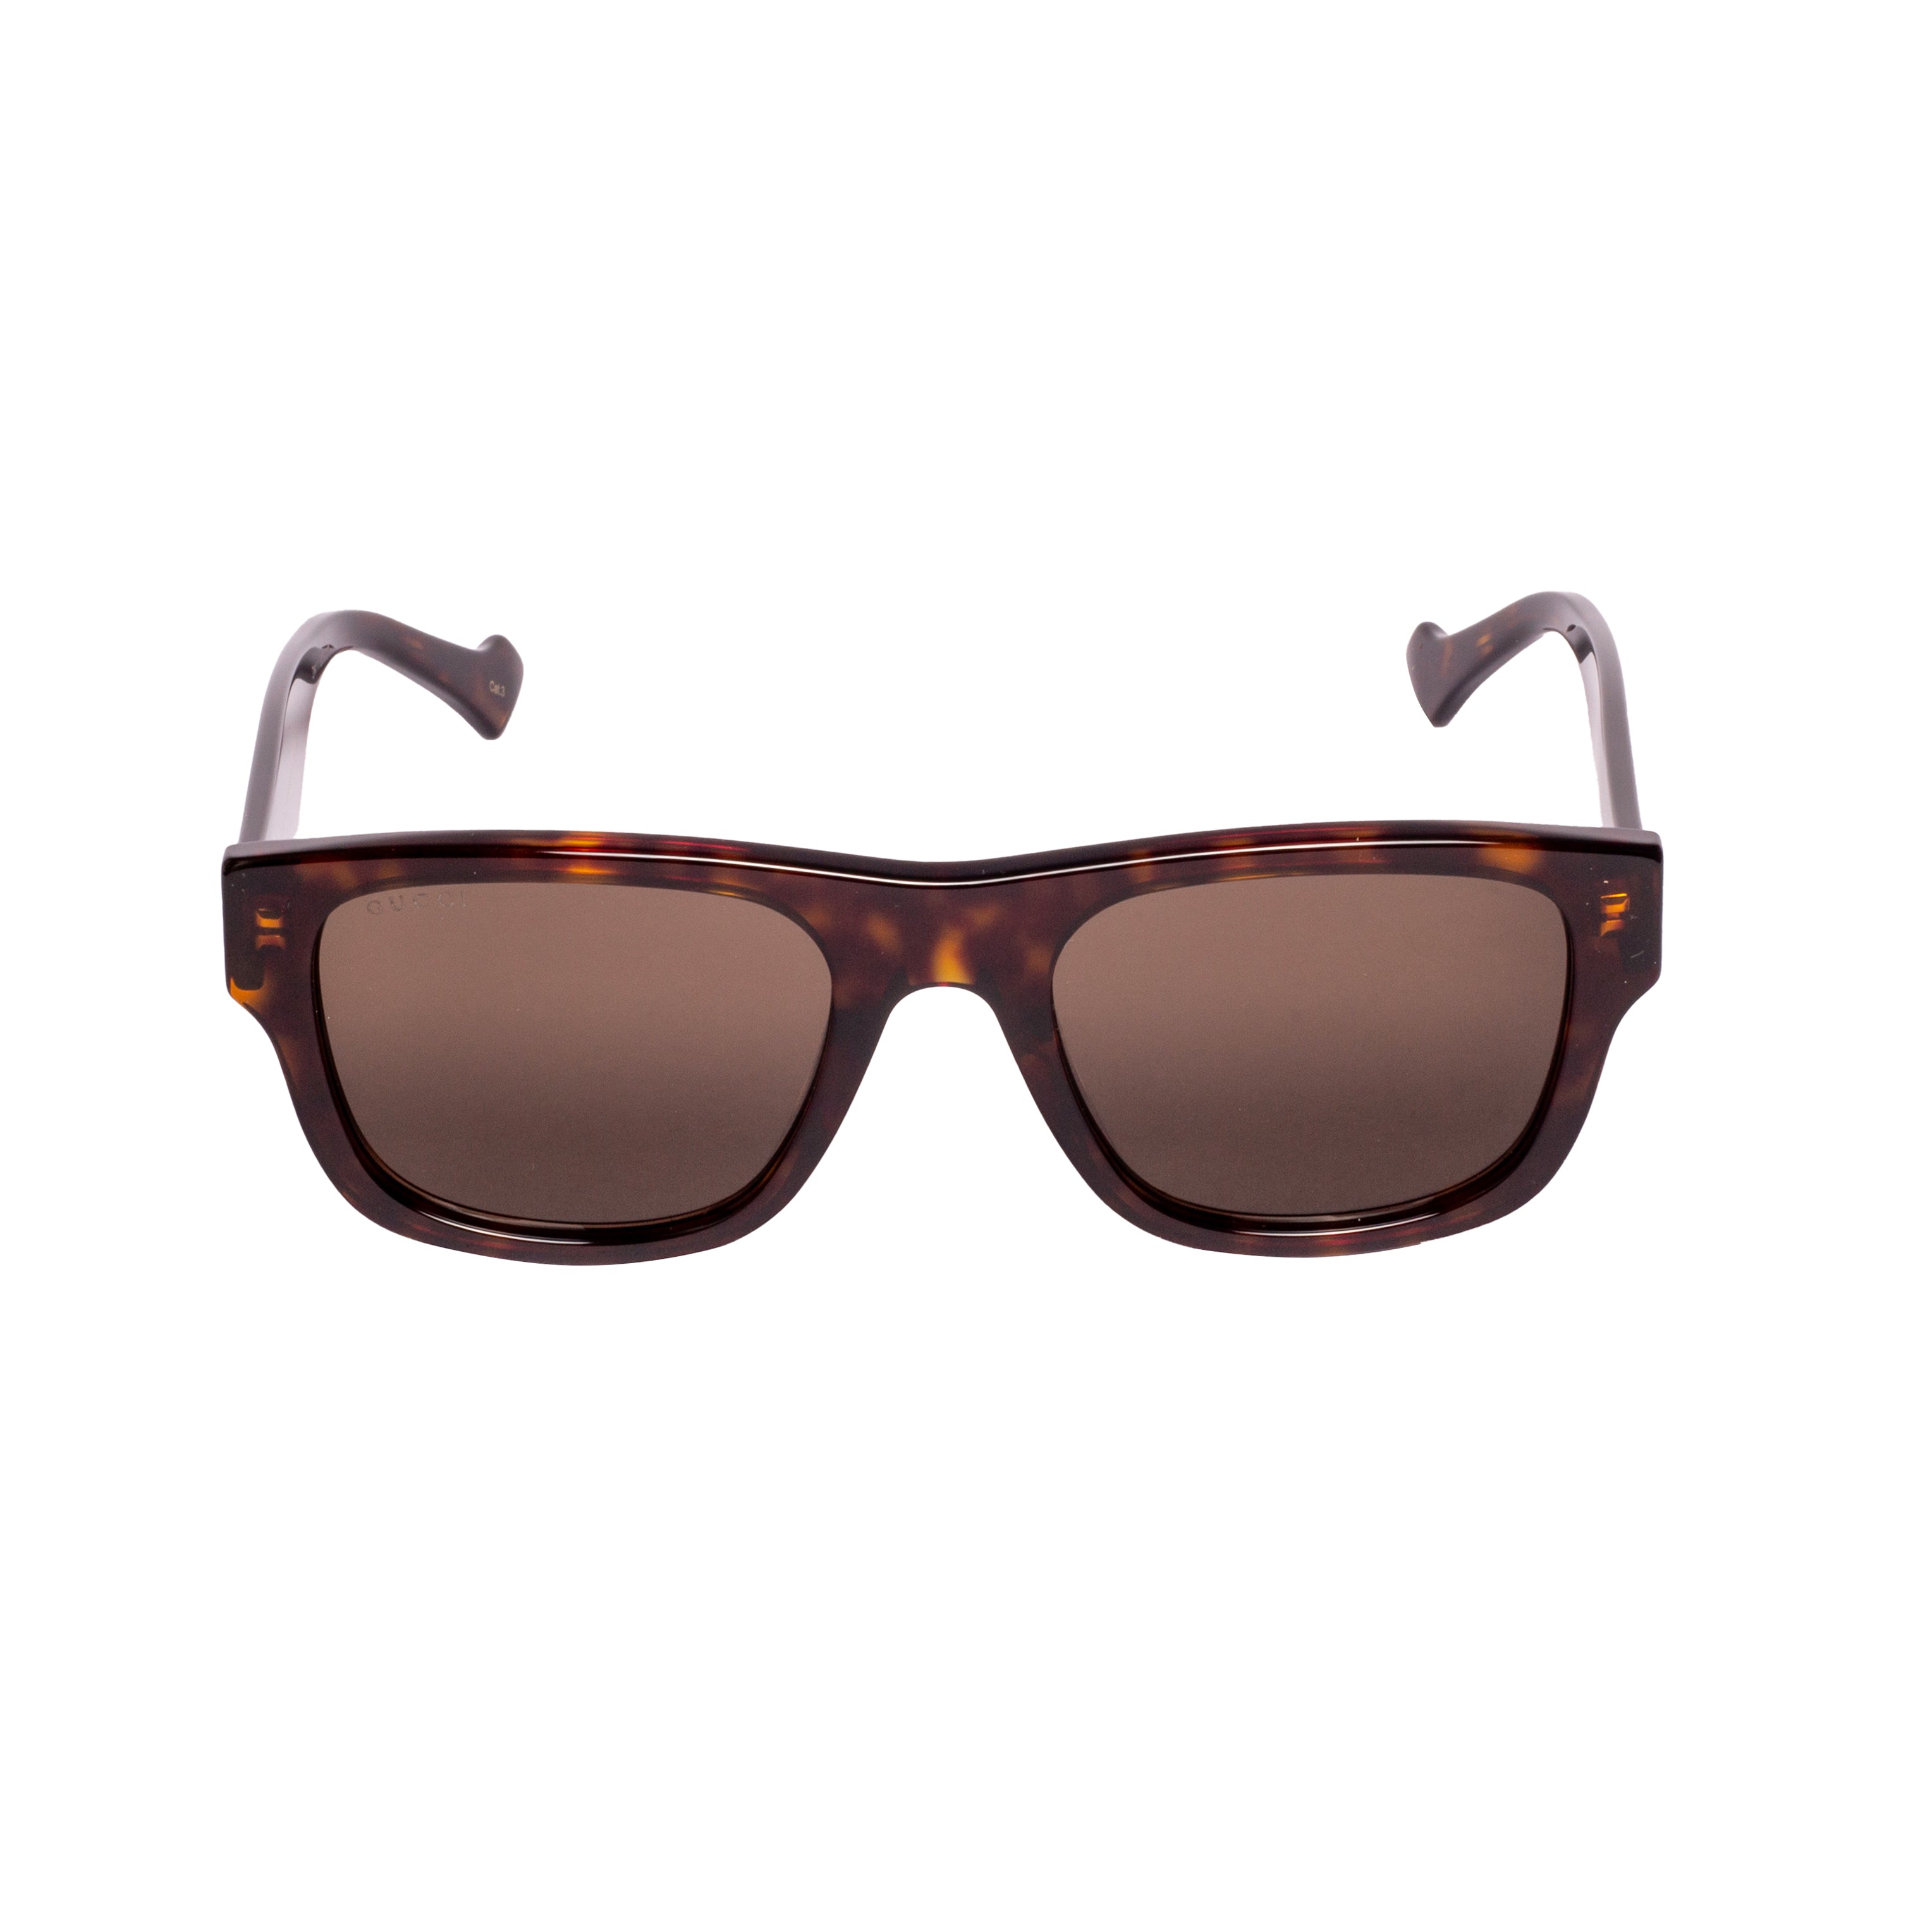 Discover more than 271 gucci gg sunglasses latest